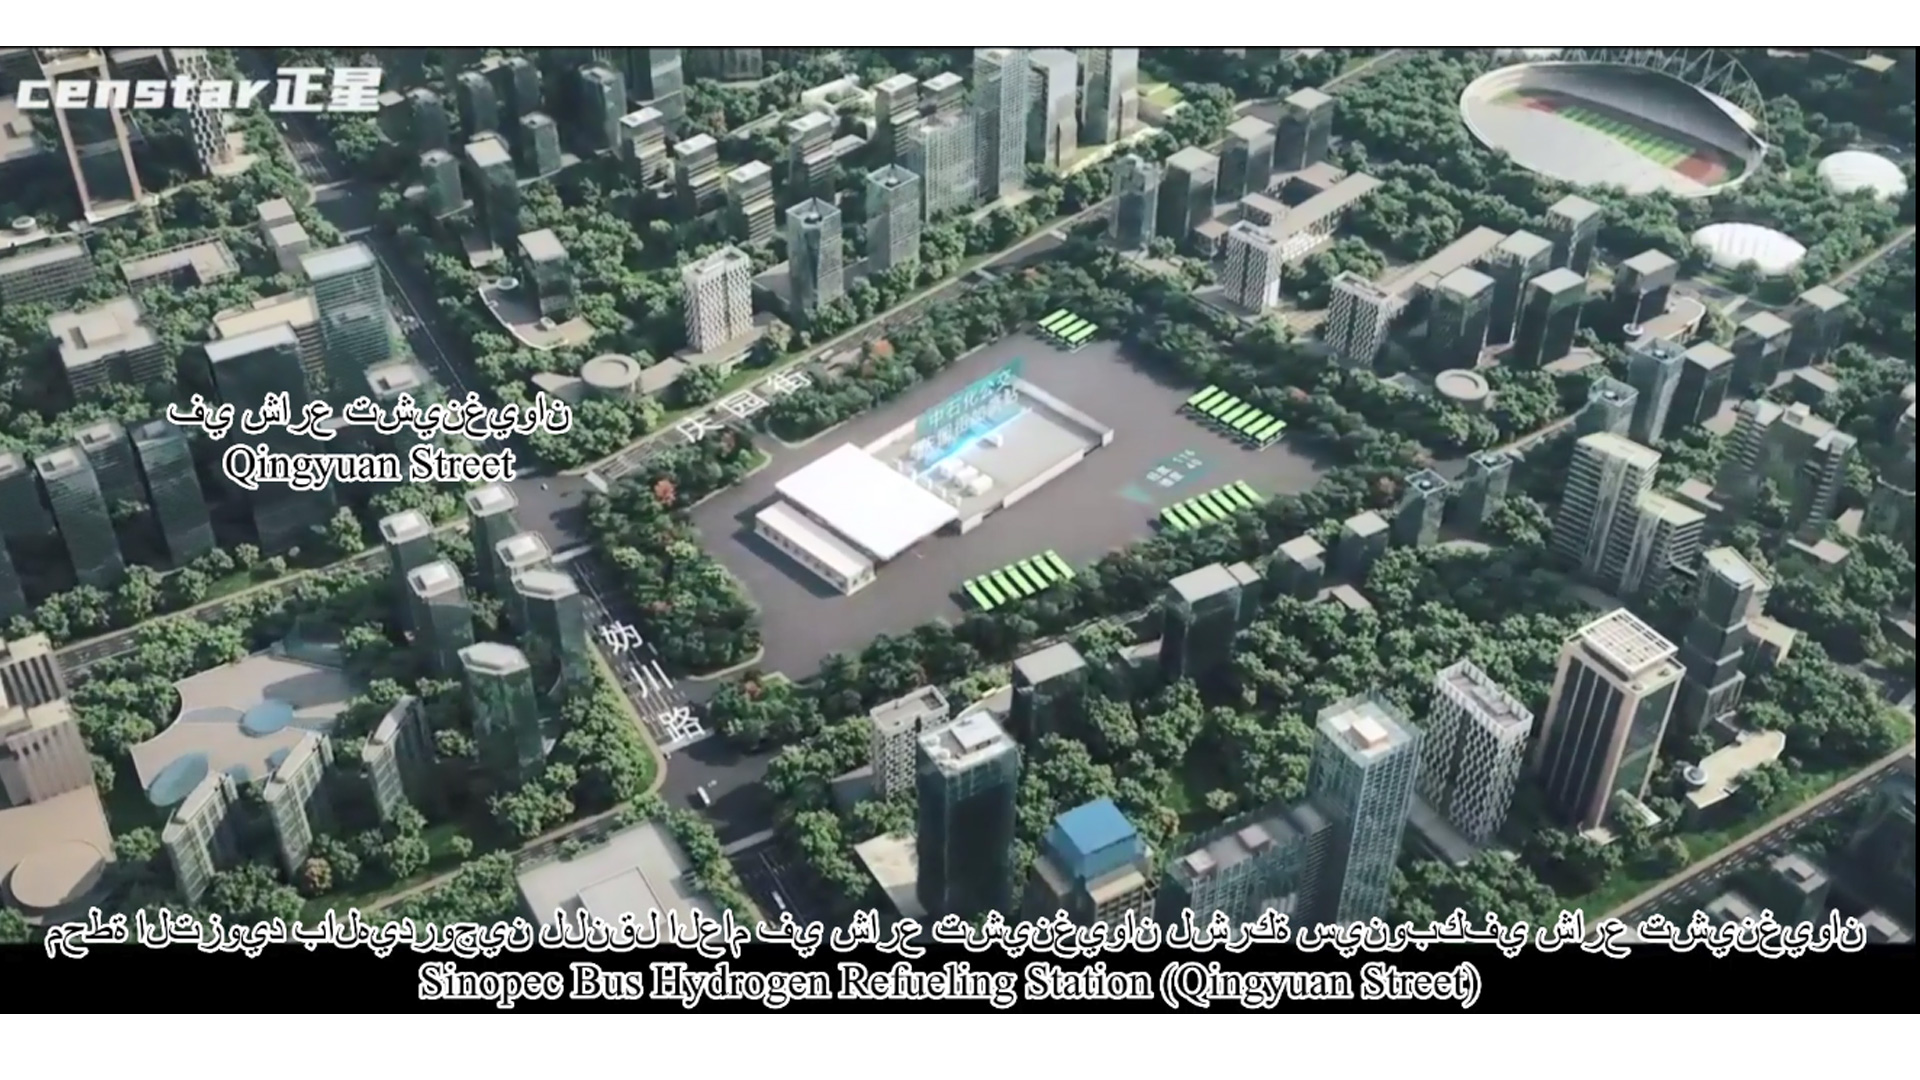 Beijing Winter Olympics Project Qingyuan Street Hydrogen Station